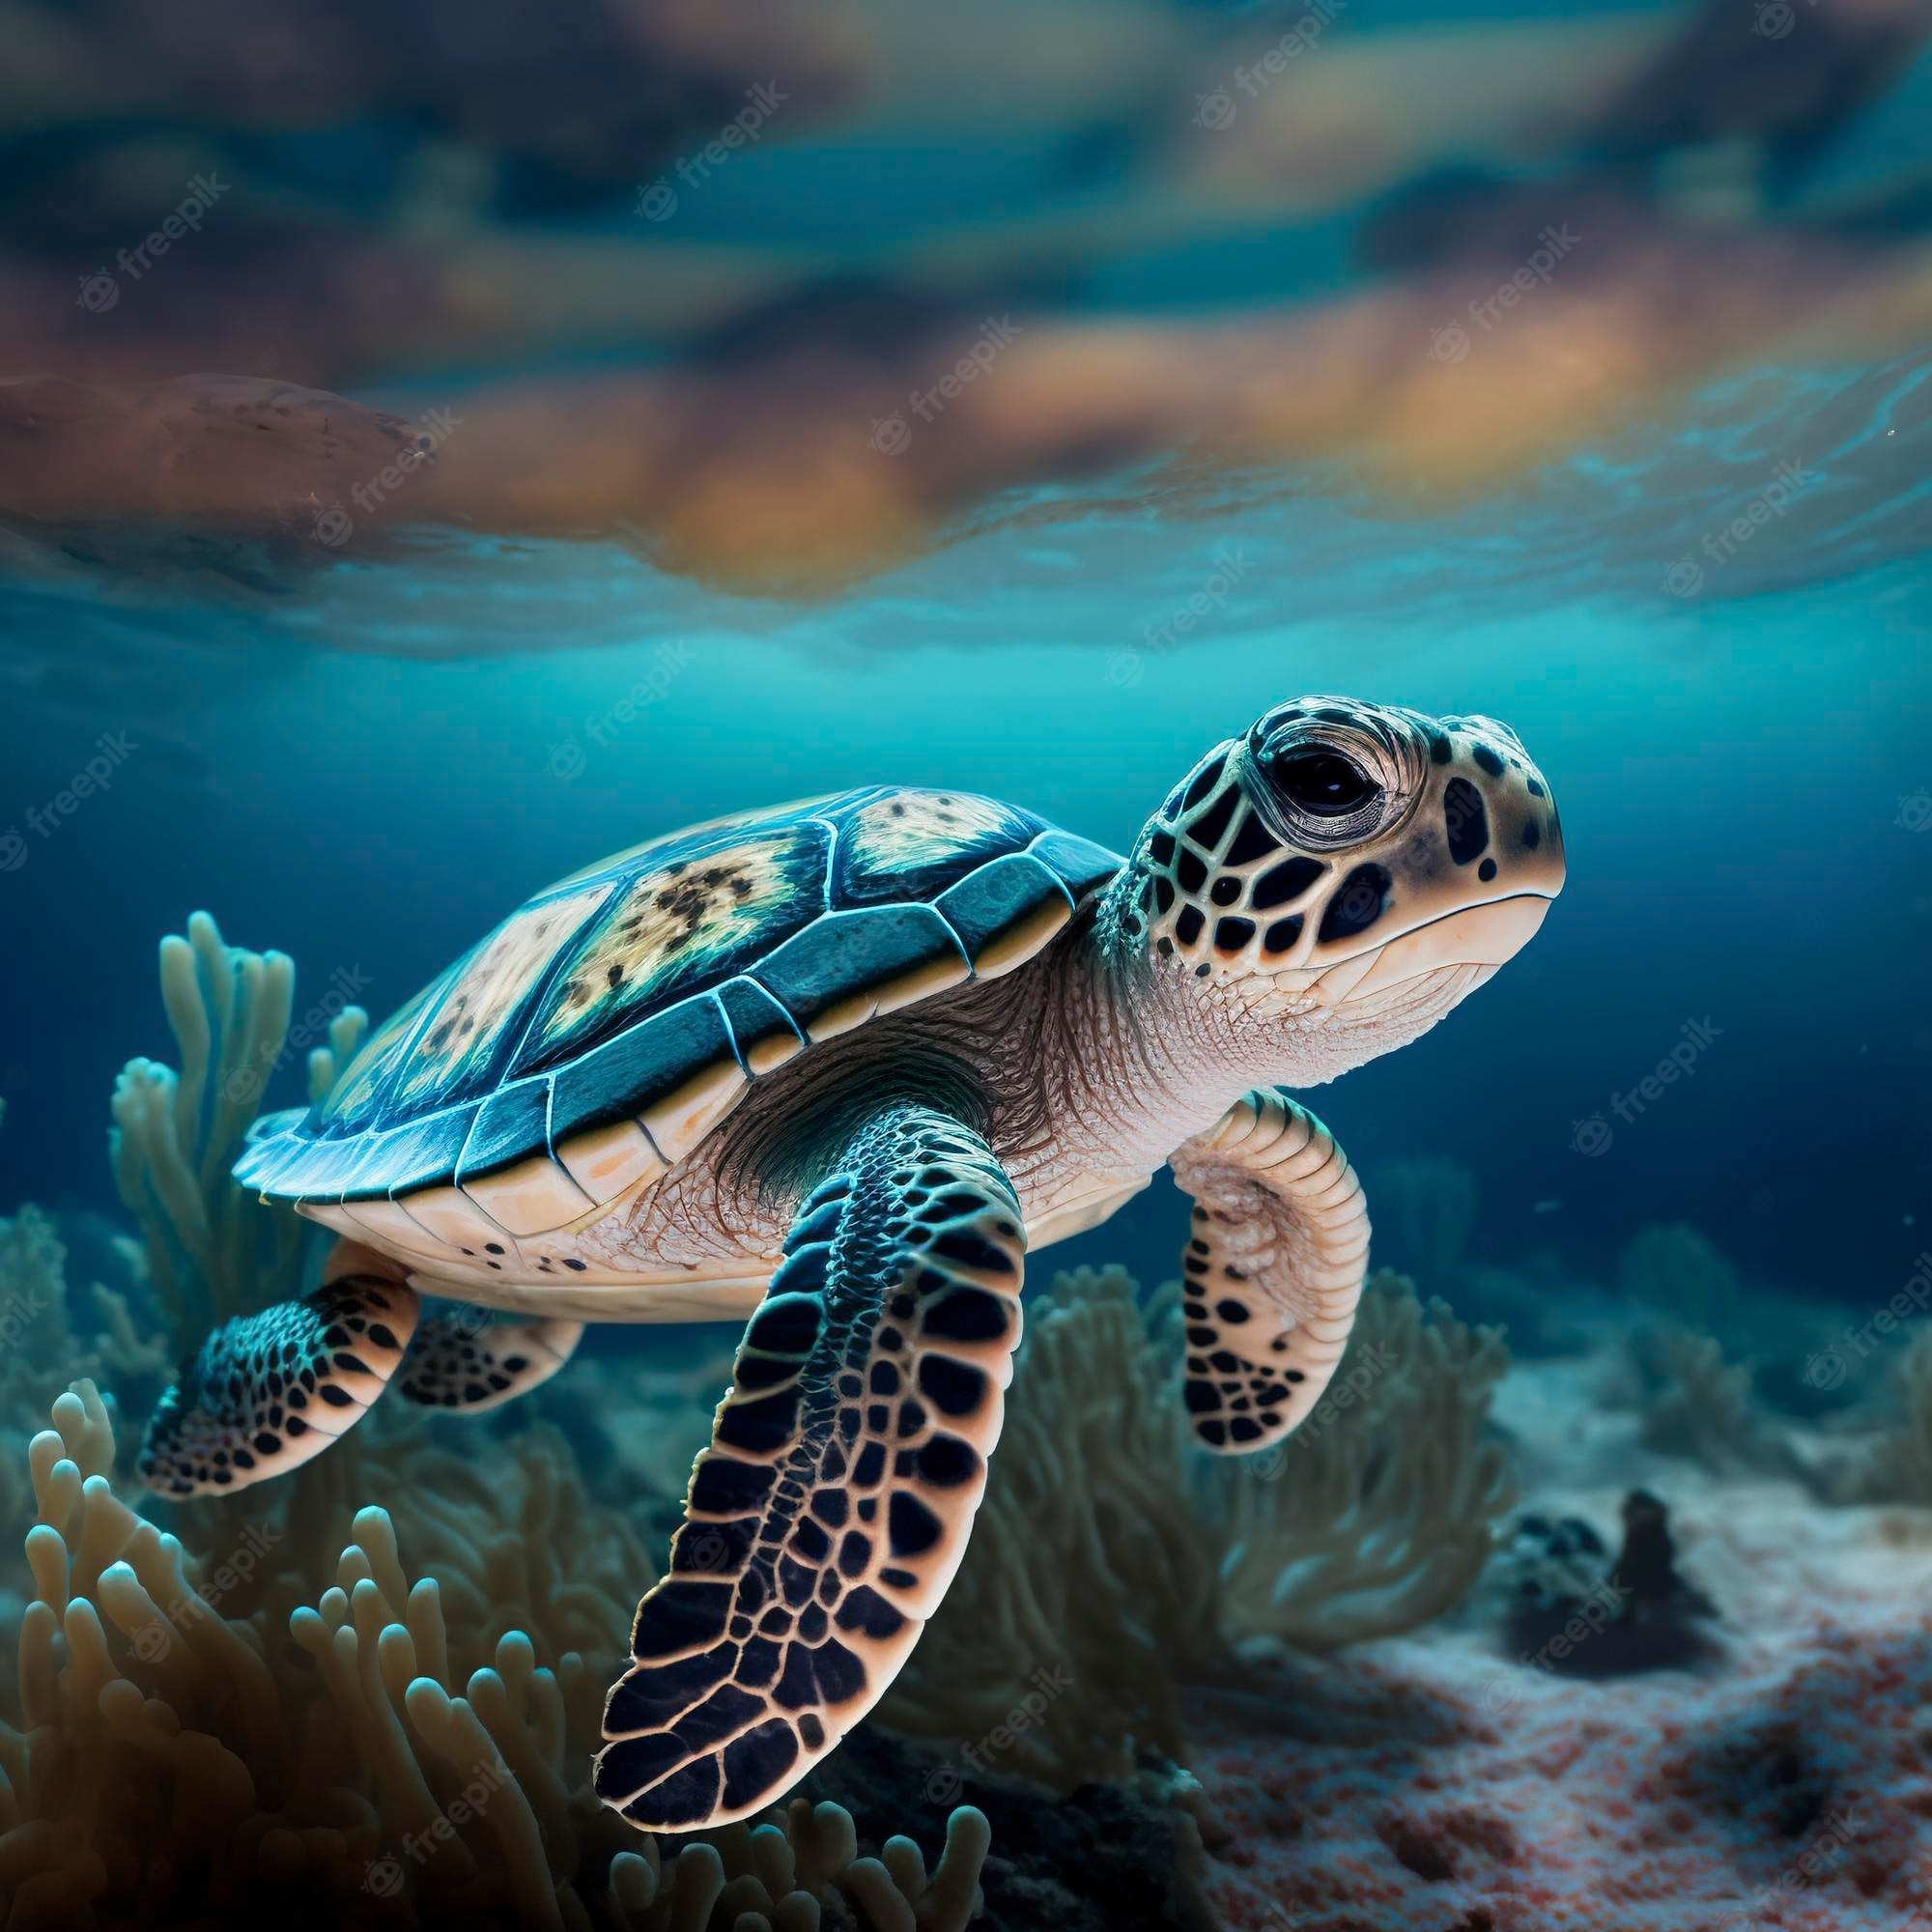 Cute Baby Sea Turtle Wallpapers